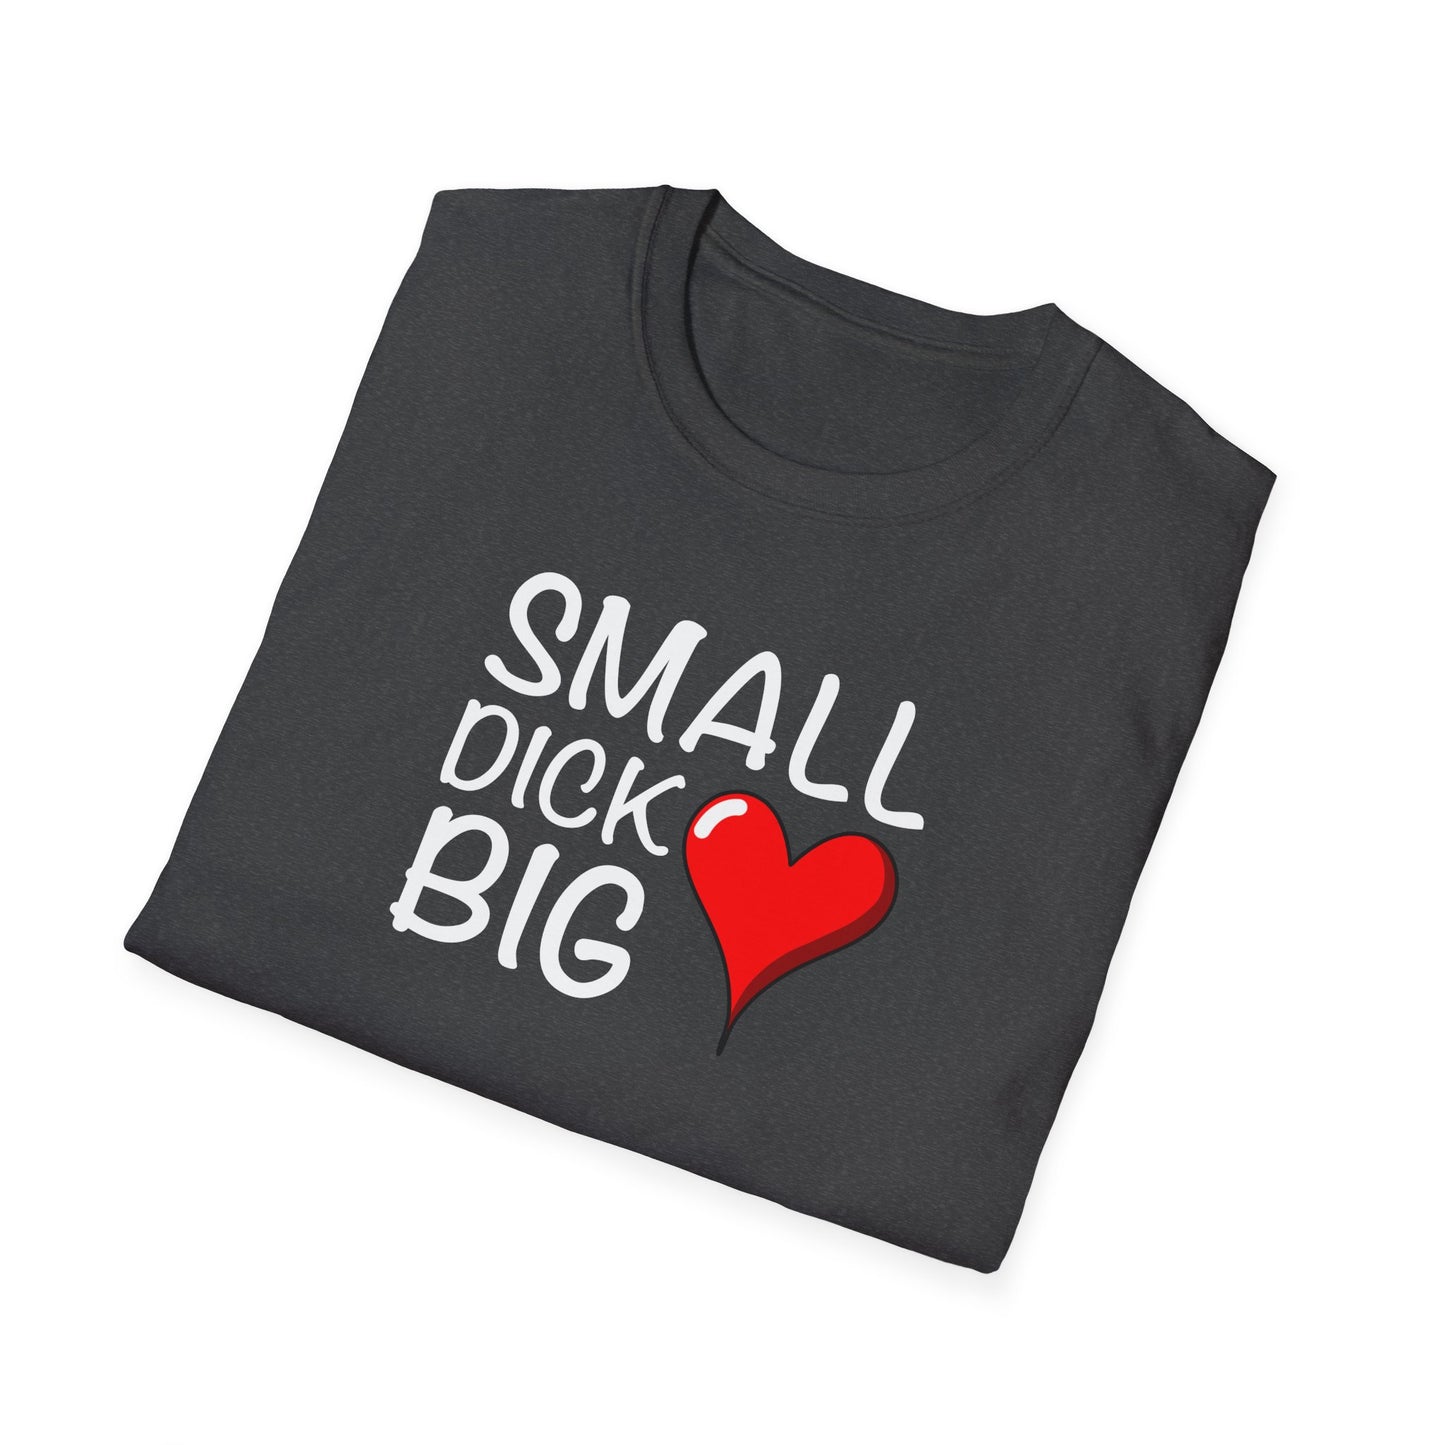 Small Dick, Big Heart